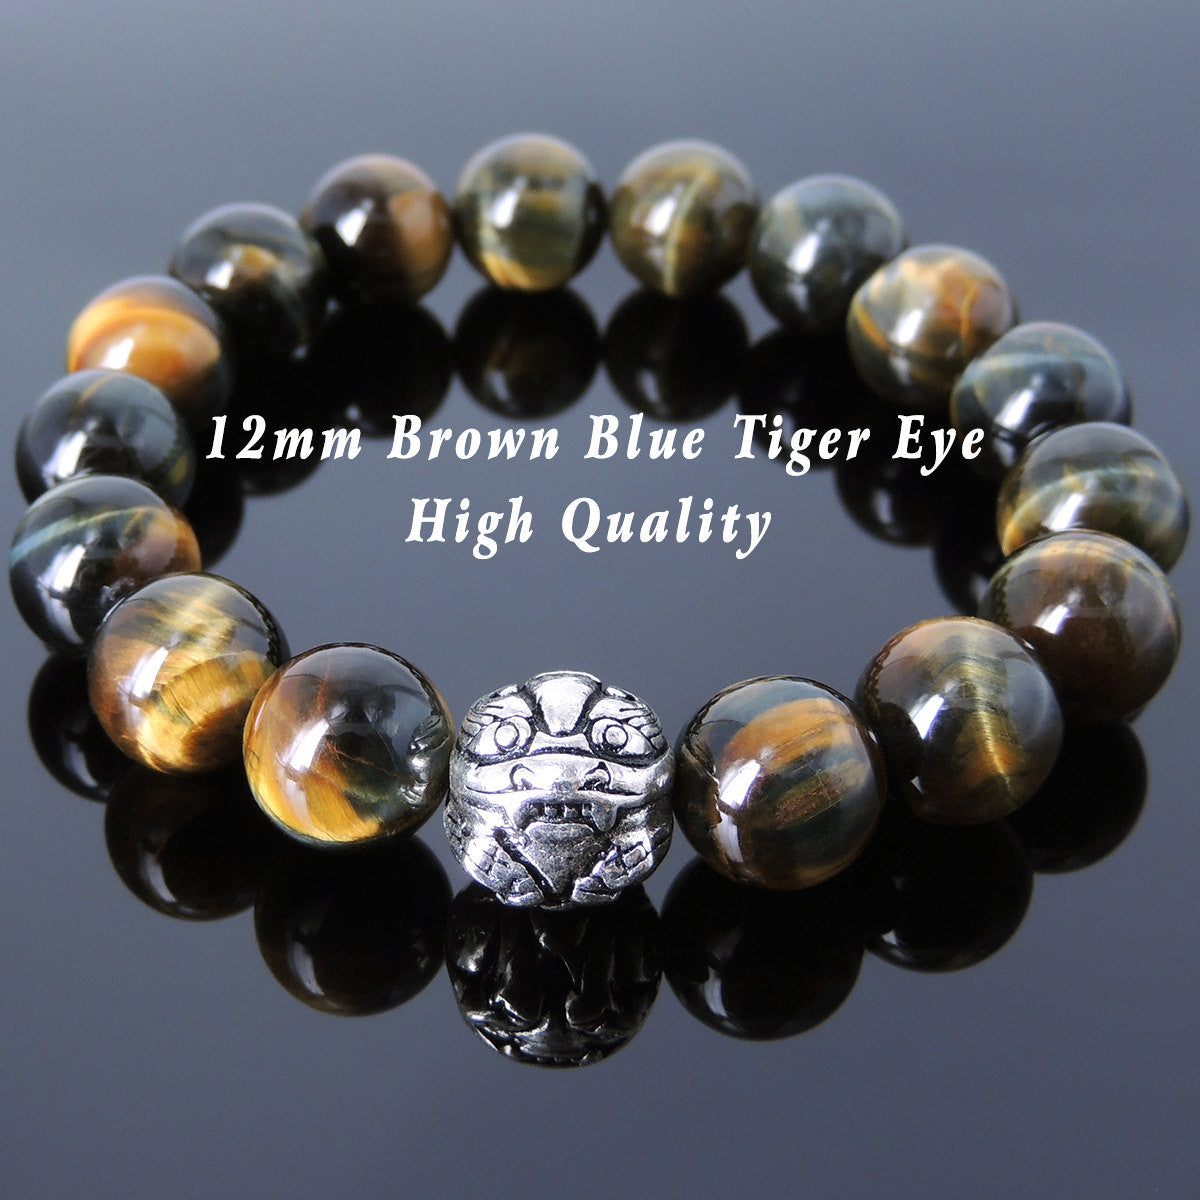 12mm Brown Blue Tiger Eye Healing Gemstone Bracelet with S925 Sterling Silver Asian Brave Troop Bead - Handmade by Gem & Silver BR885